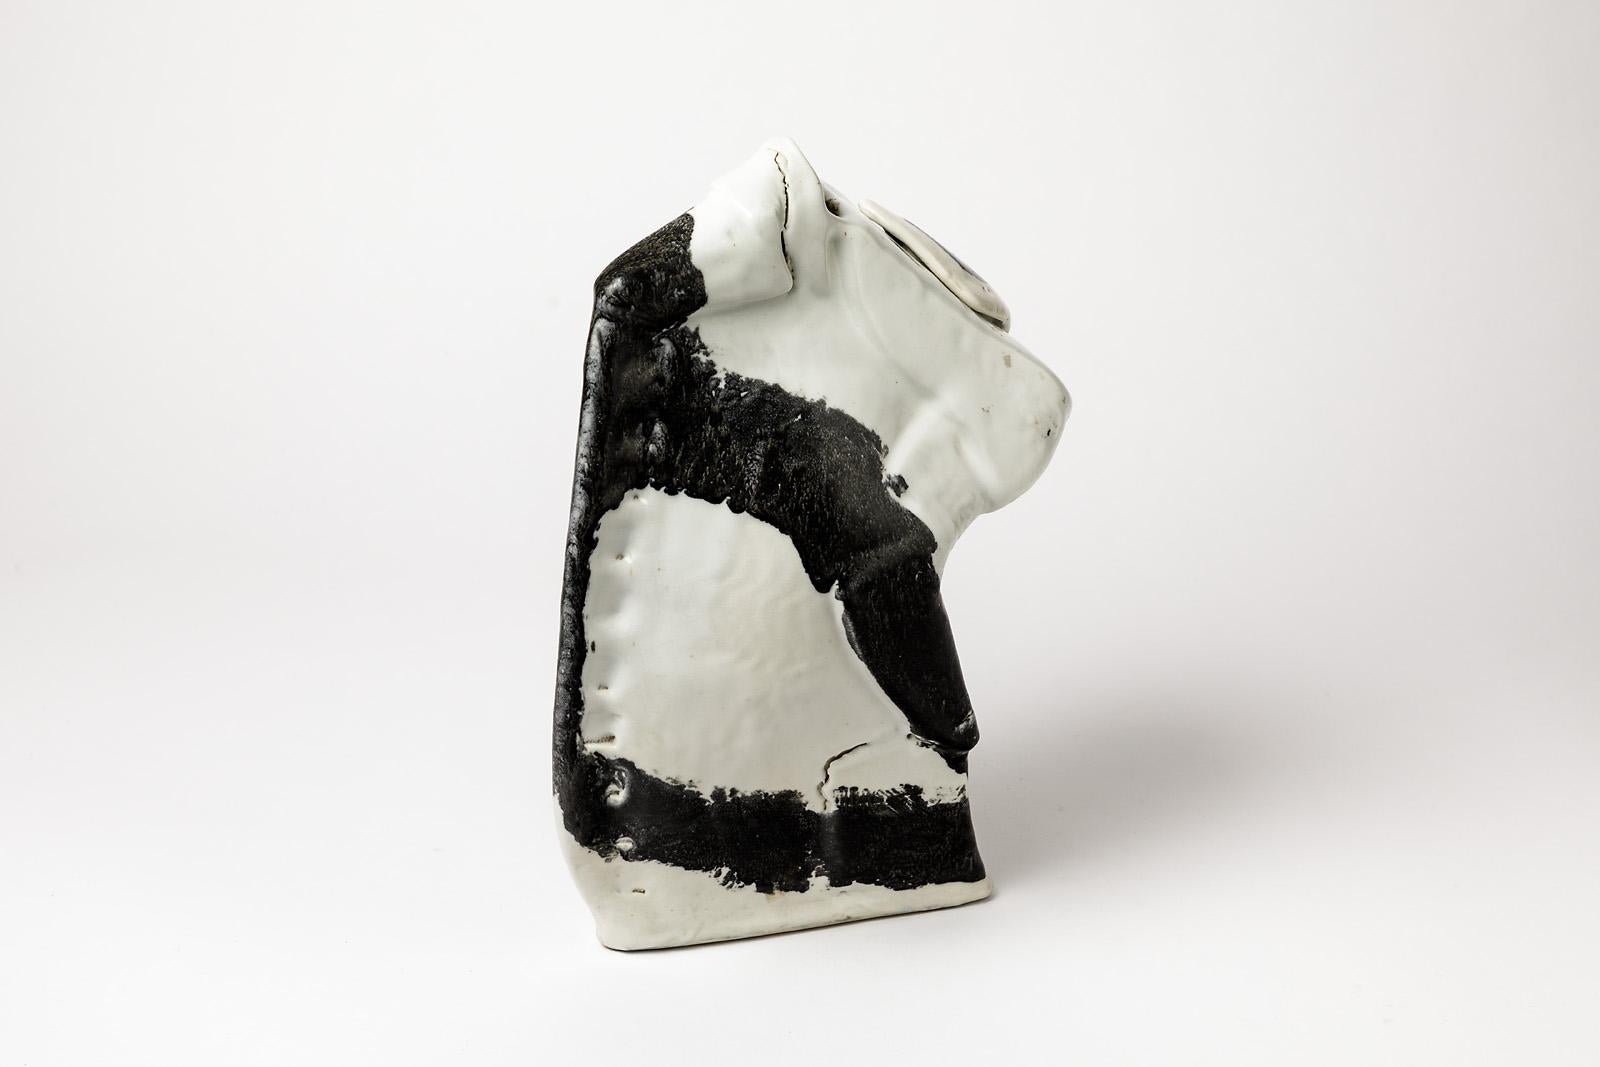 20th Century Porcelain Ceramic Vase Sculpture by Michel Lanos White and Black Pottery Glaze For Sale